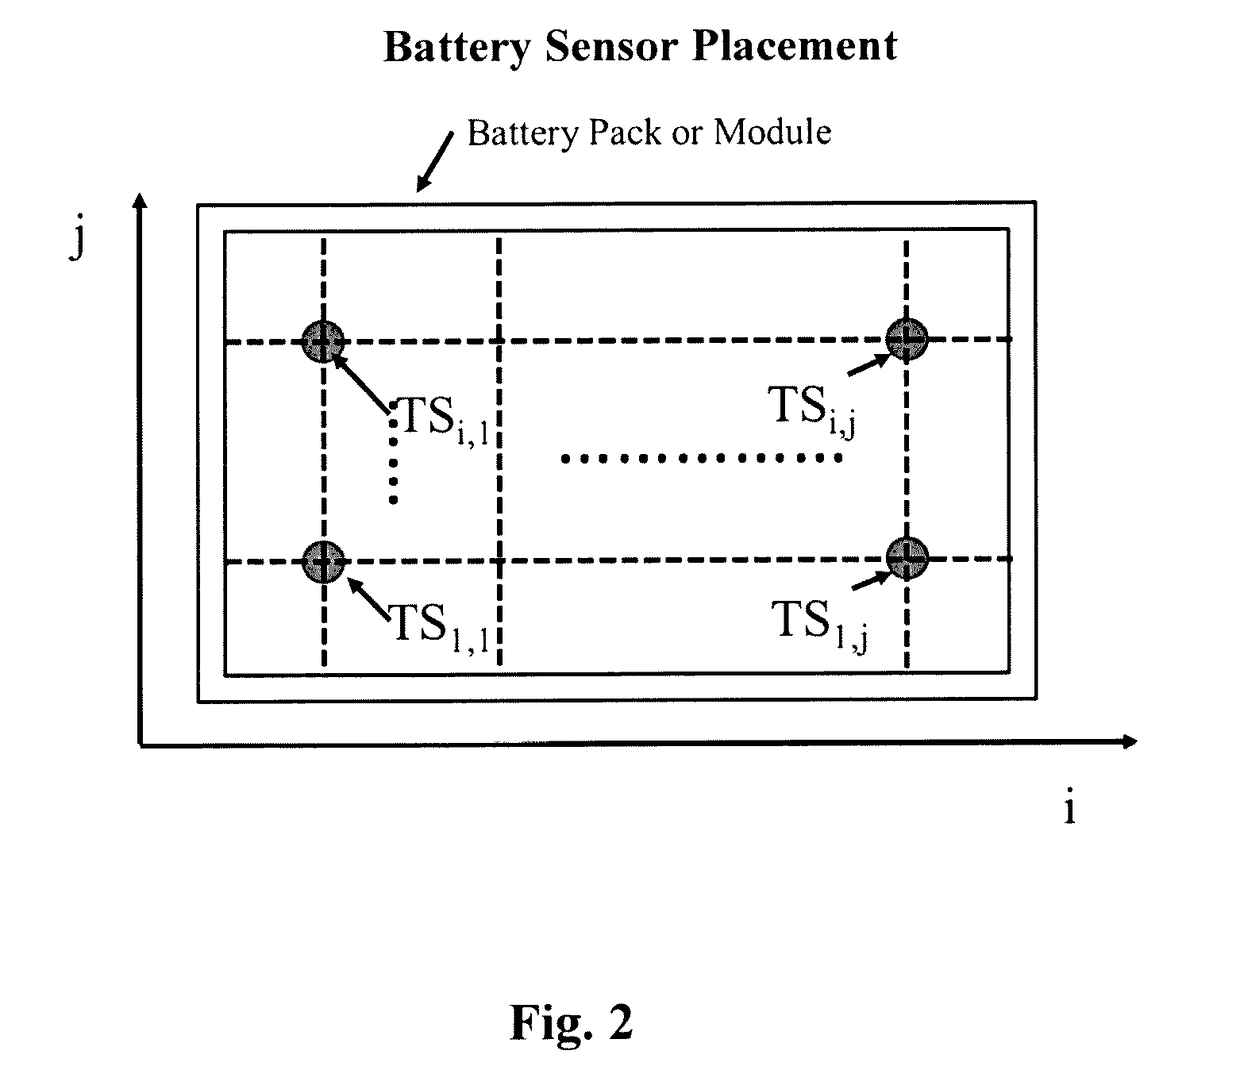 Thermal Monitoring of Battery Packs